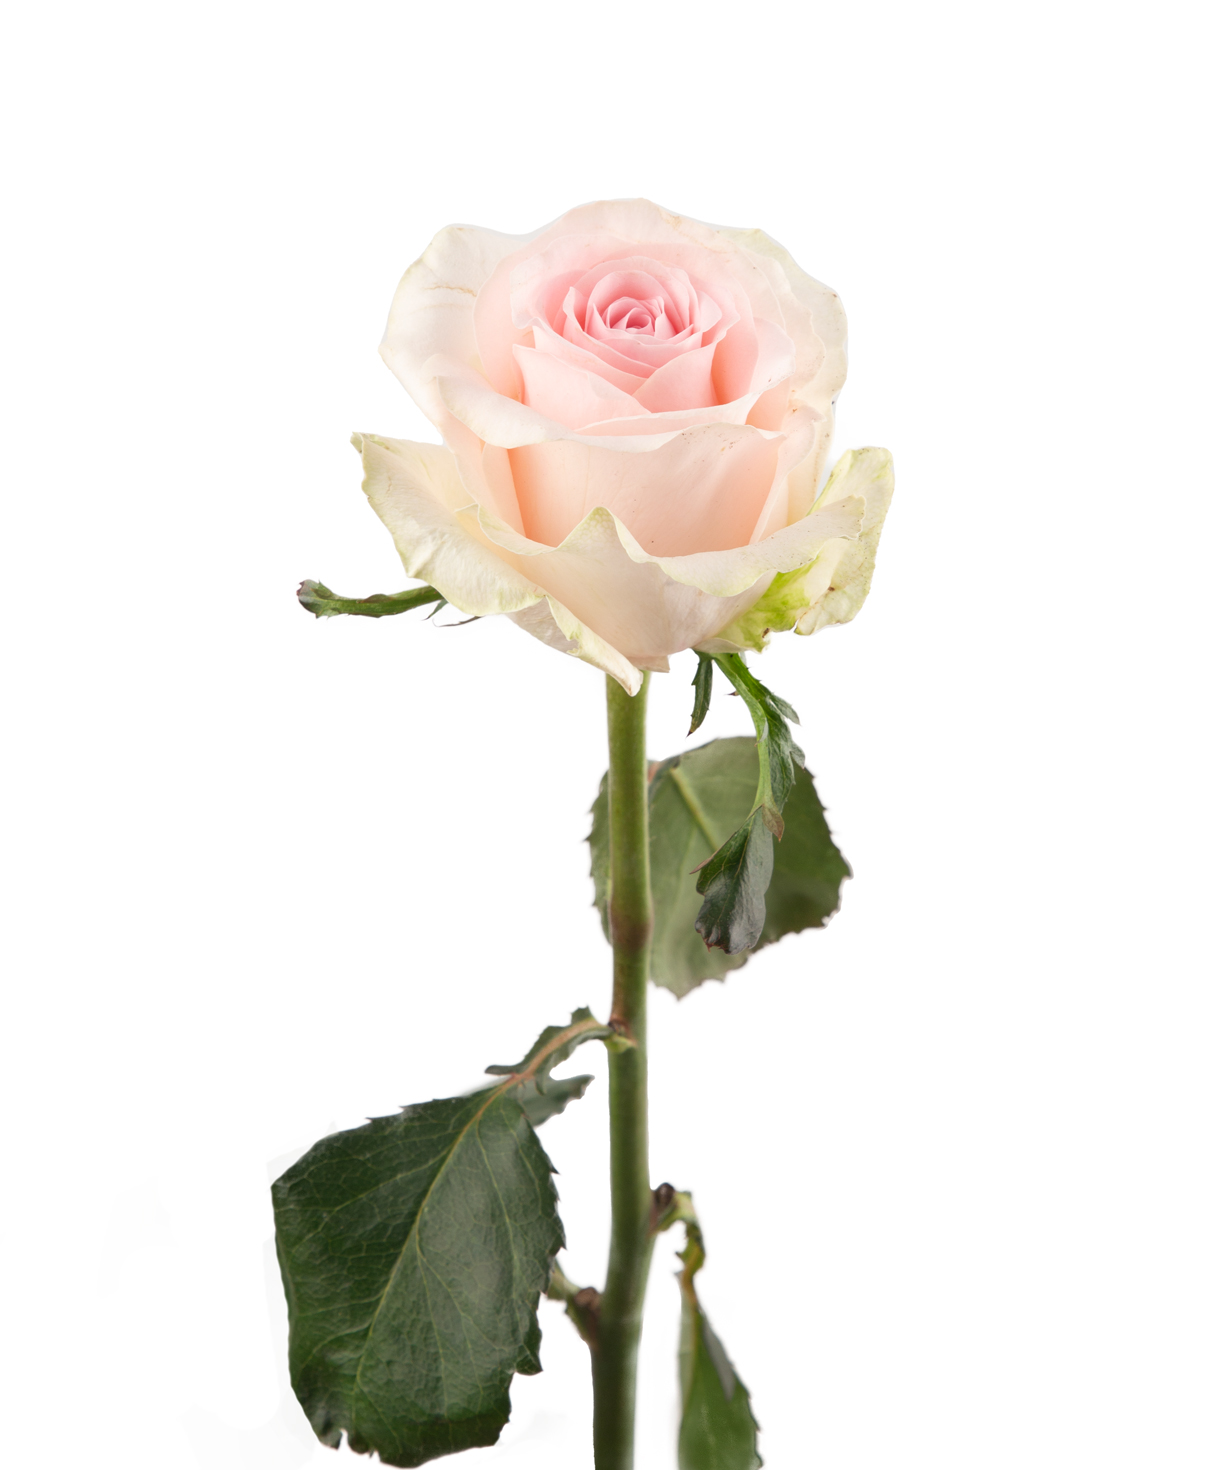 Rose `Revival sweet` light pink, 80 cm